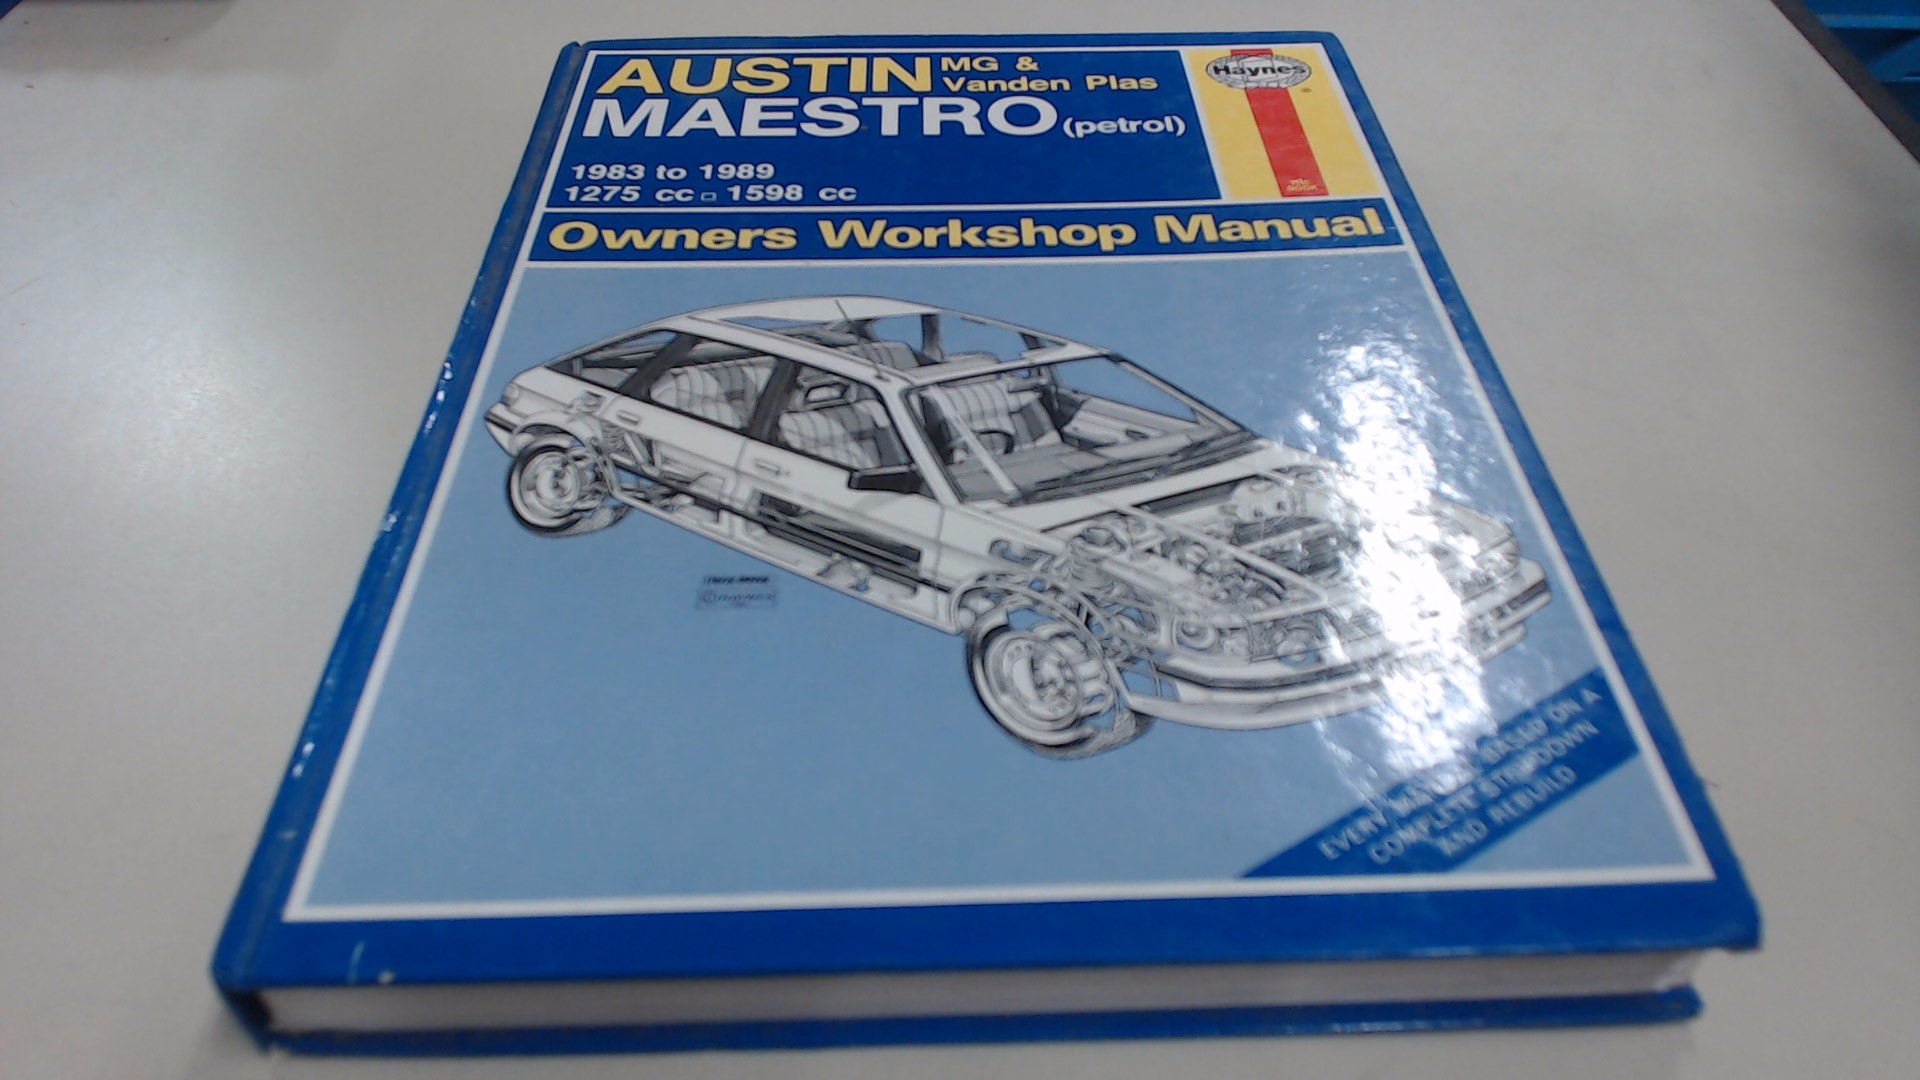 Austin, M.G.and Vanden Plas Maestro Owners Workshop Manual - Mead, John S.